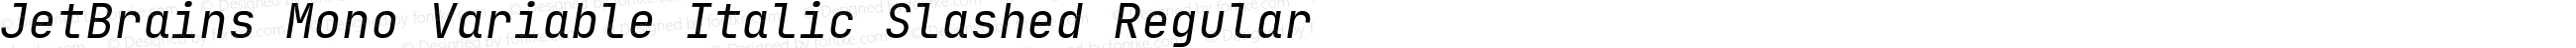 JetBrains Mono Variable Italic Slashed